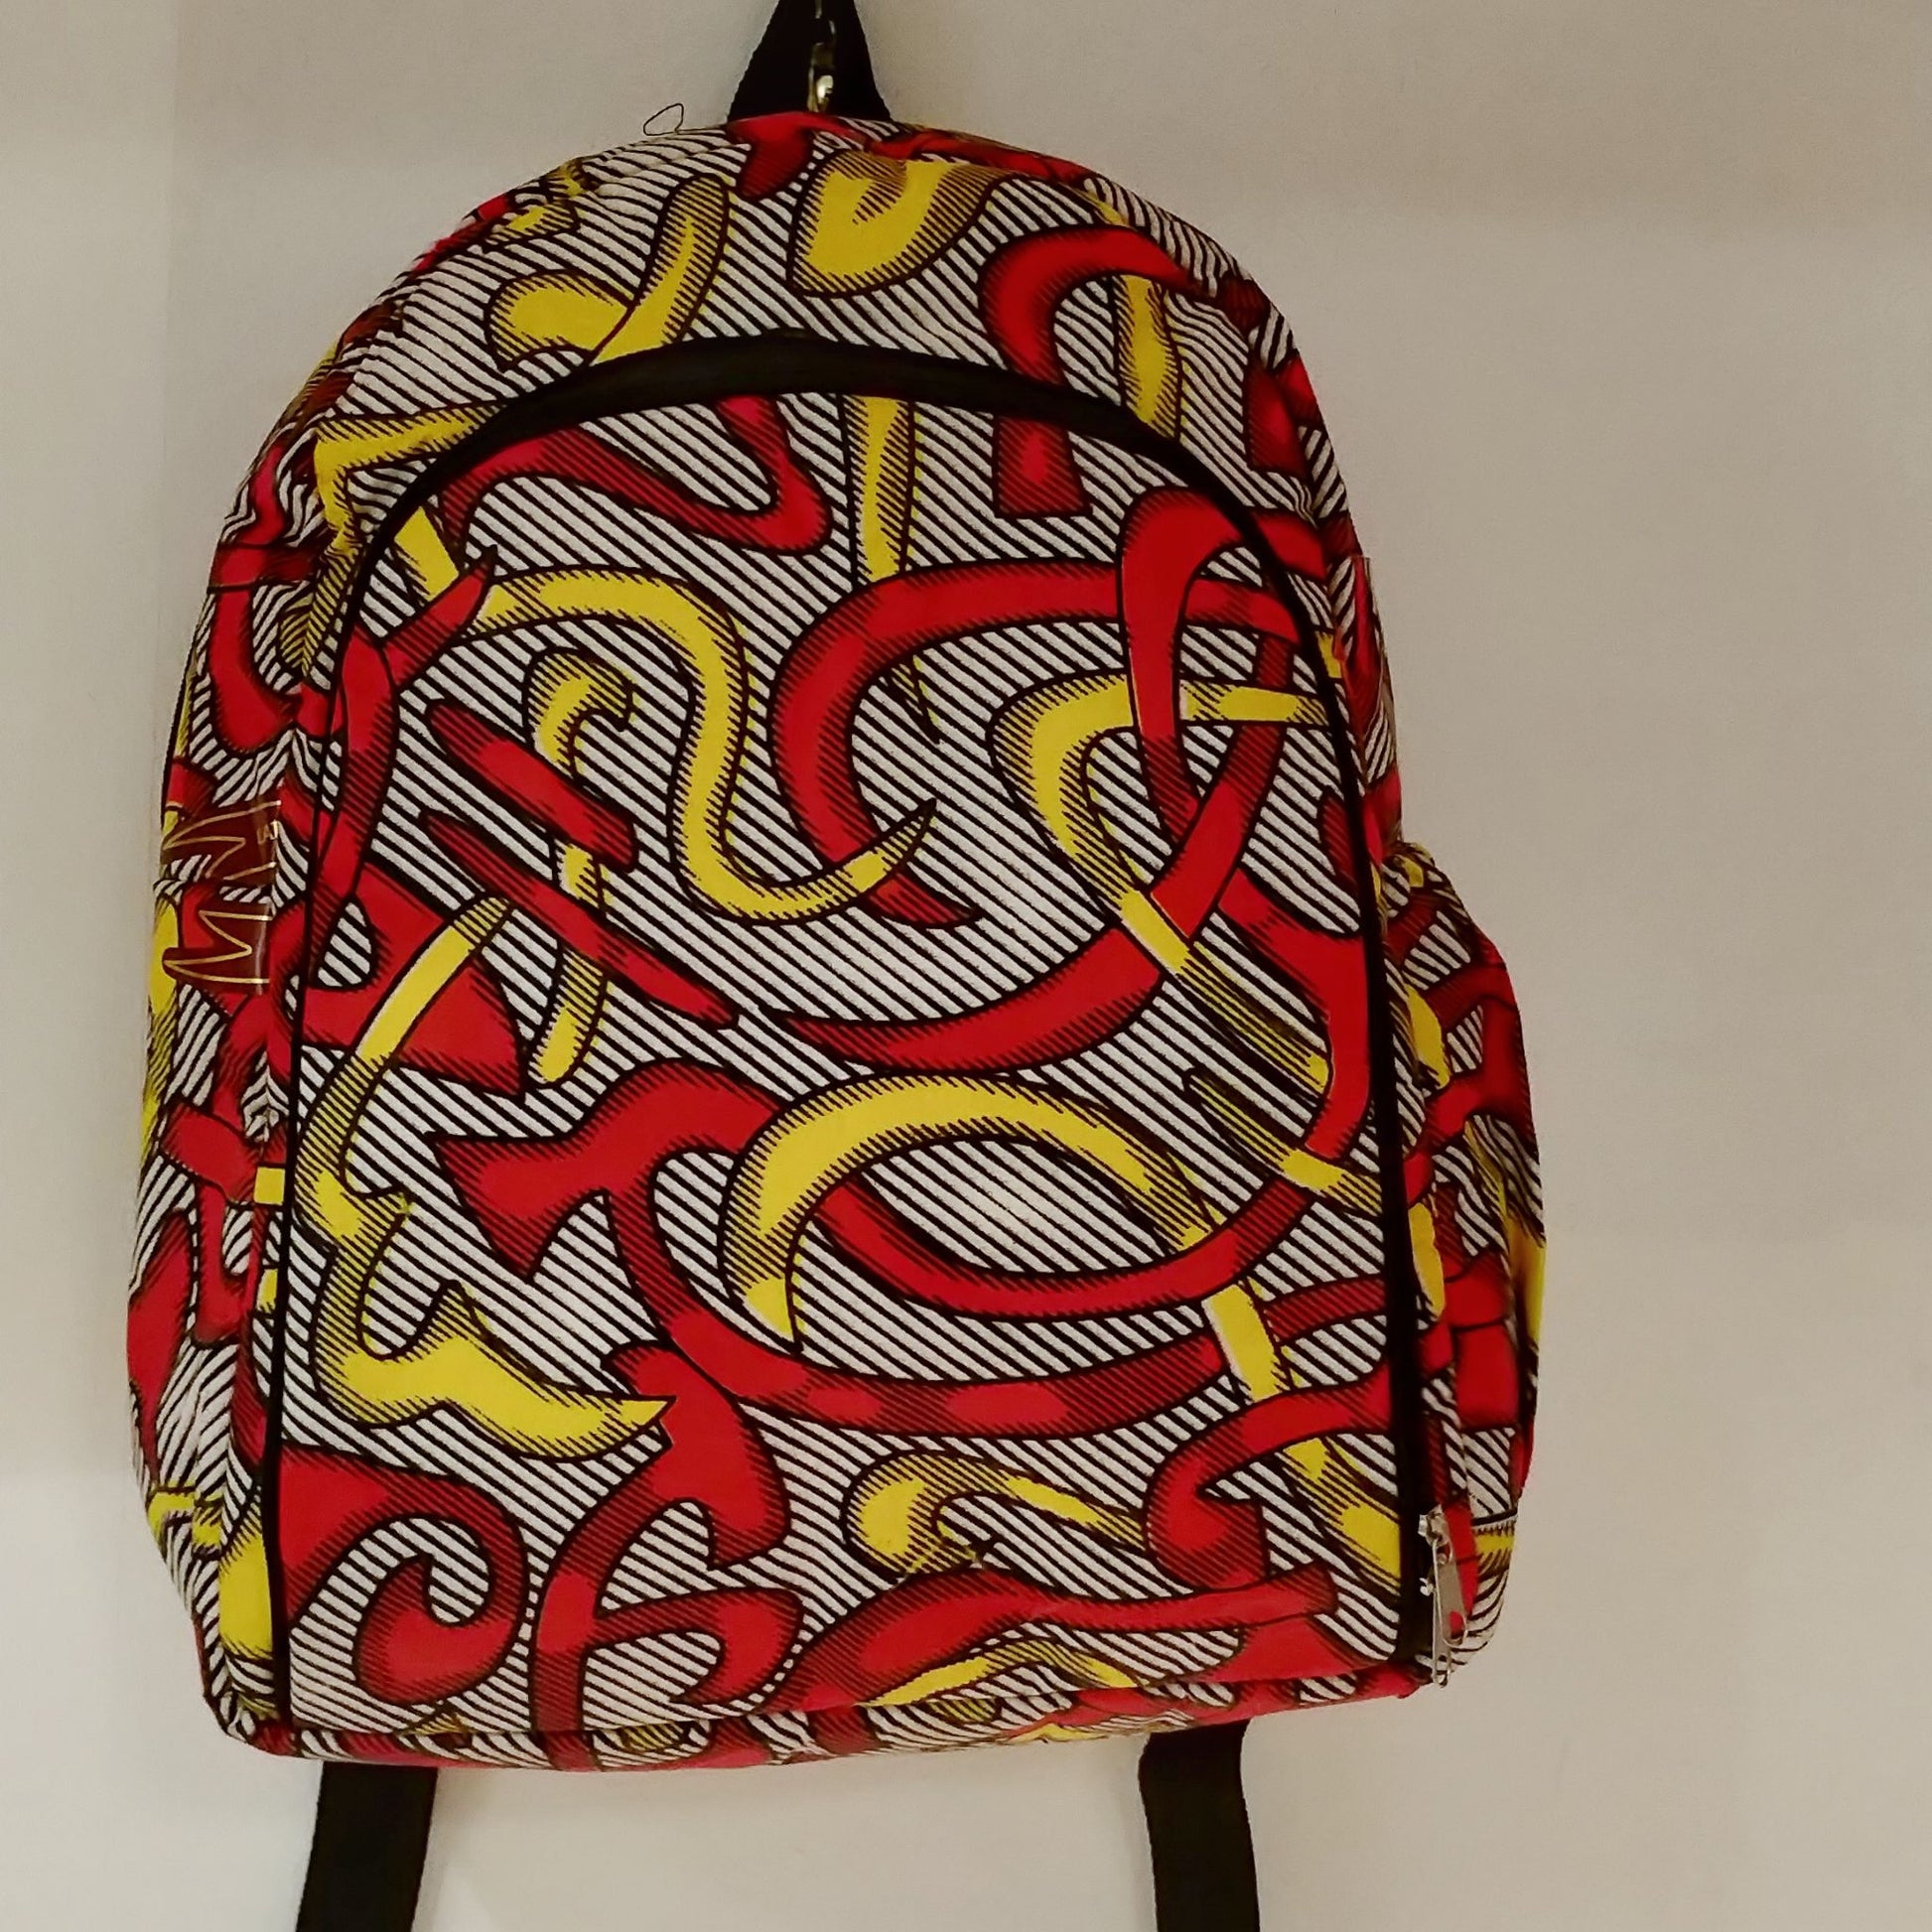 Handmade Backpack Empowering Women in Uganda - red swirl